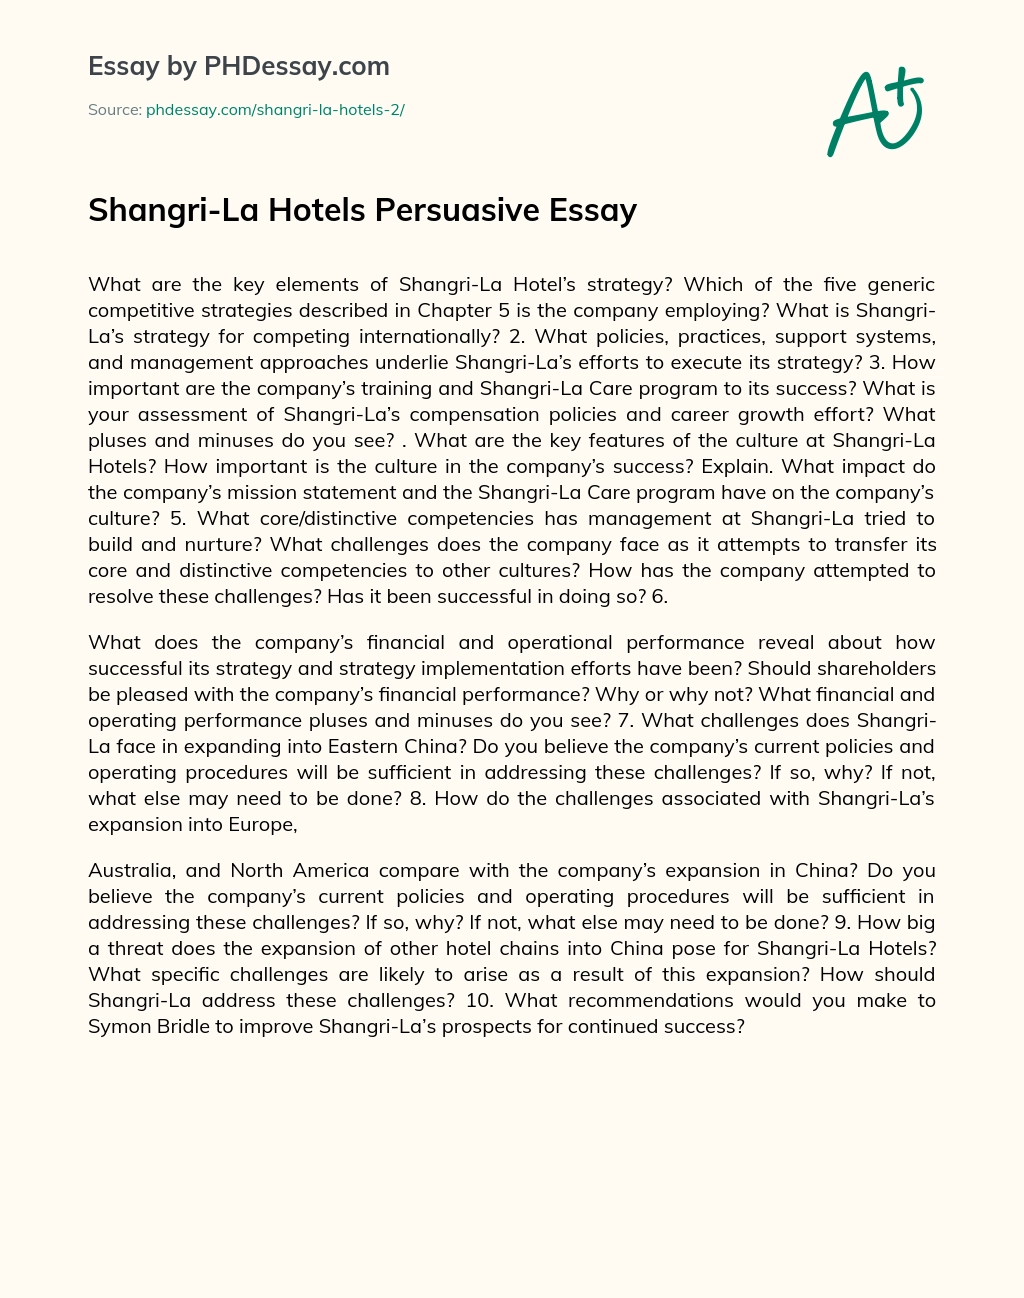 Shangri-La Hotels Persuasive Essay essay